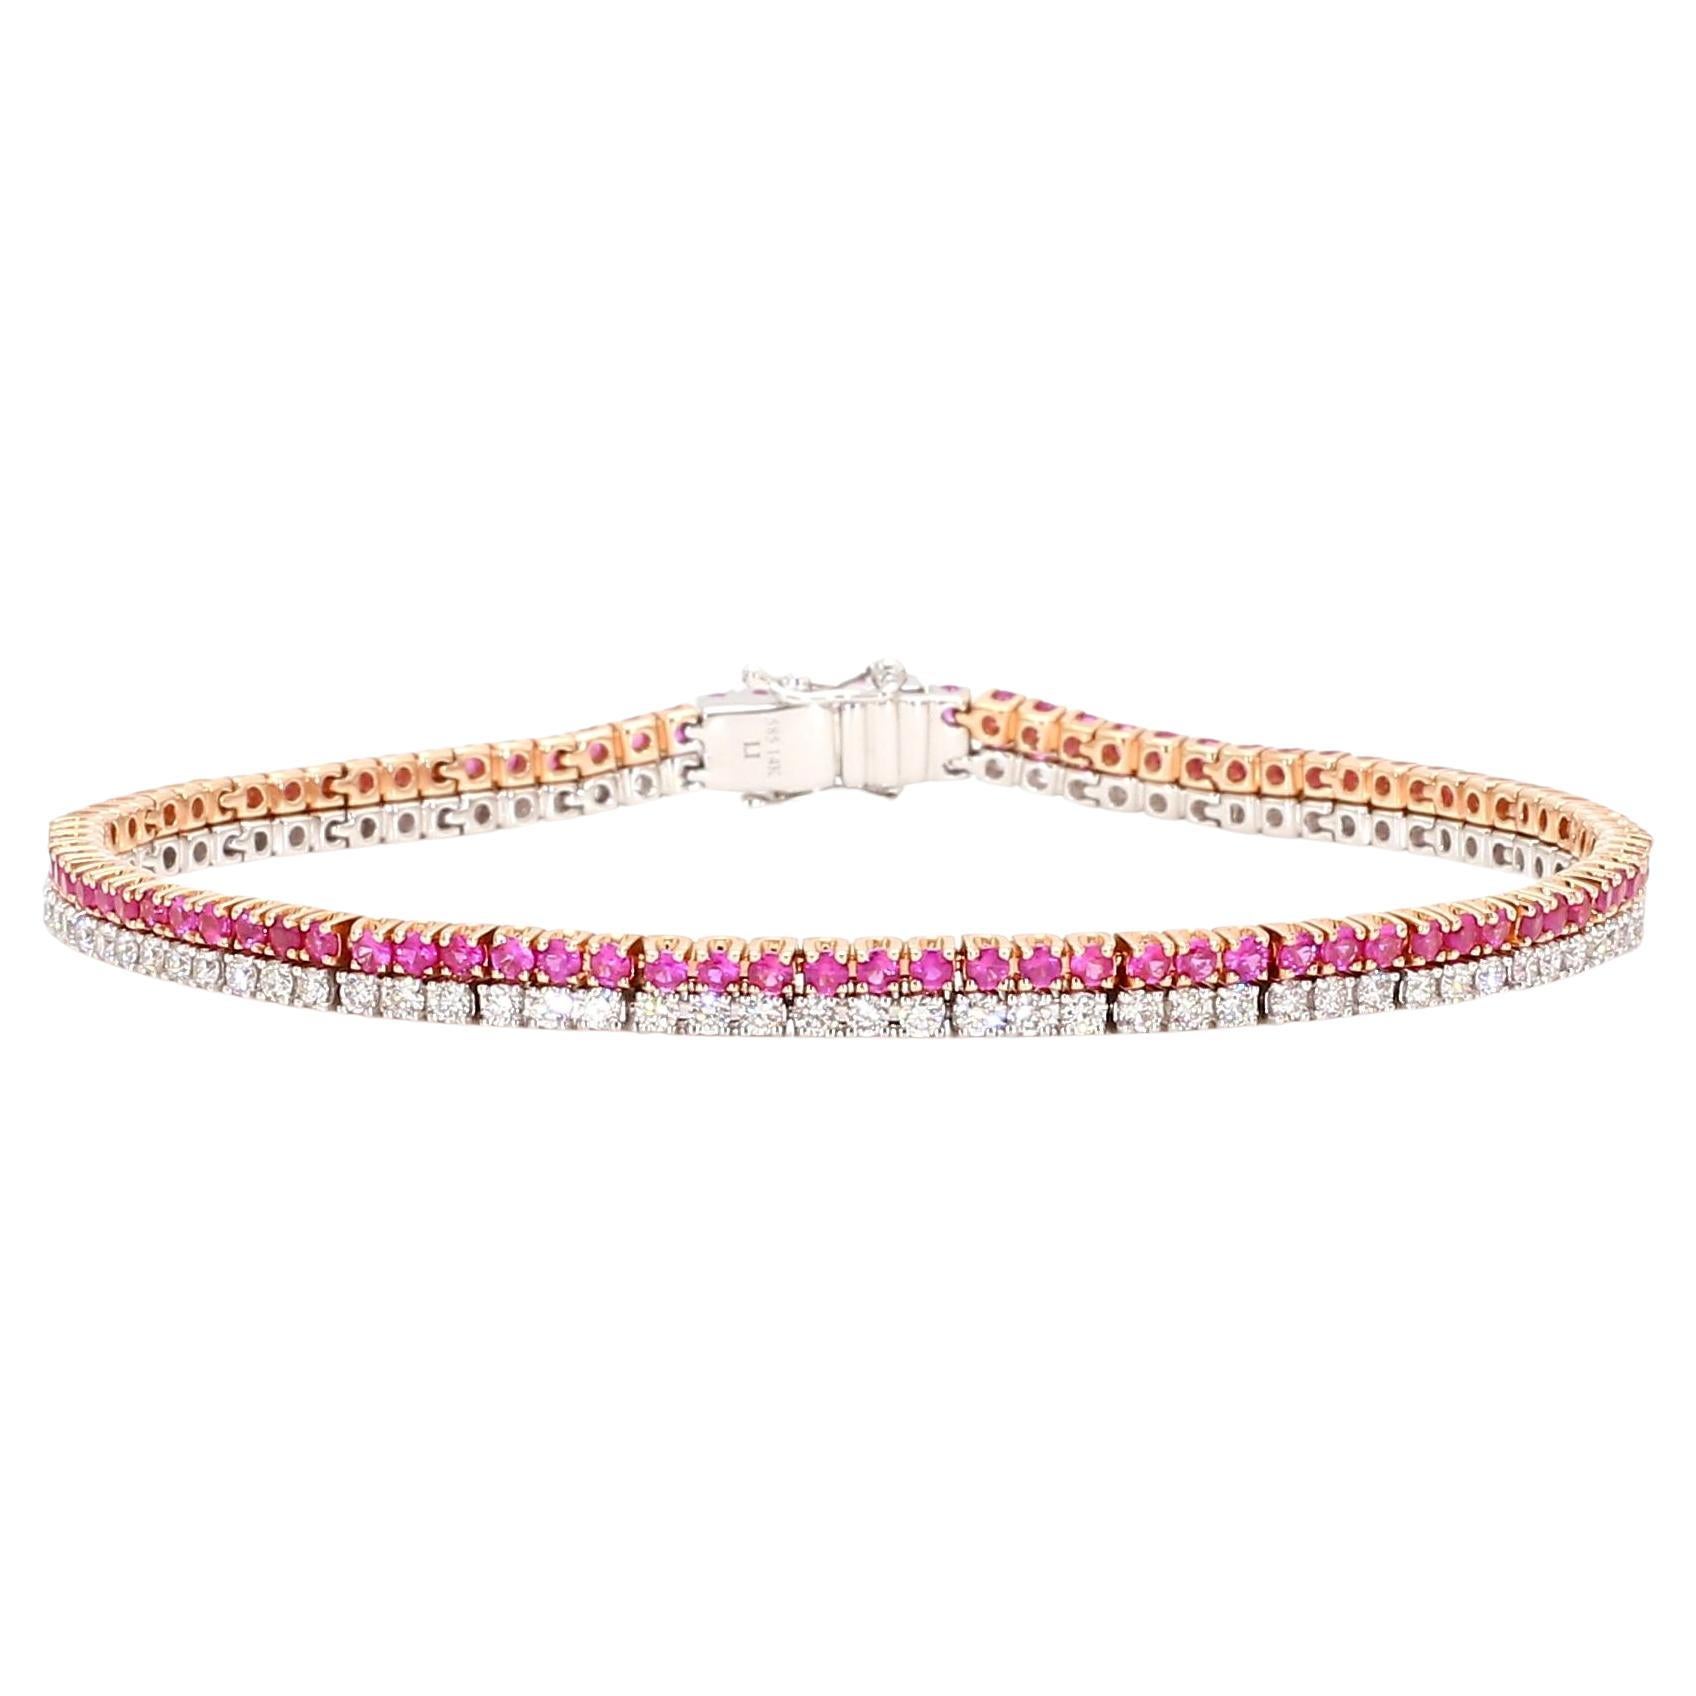 Natural Pink Round Sapphire and White Diamond 3.50 Carat TW Gold Tennis Bracelet